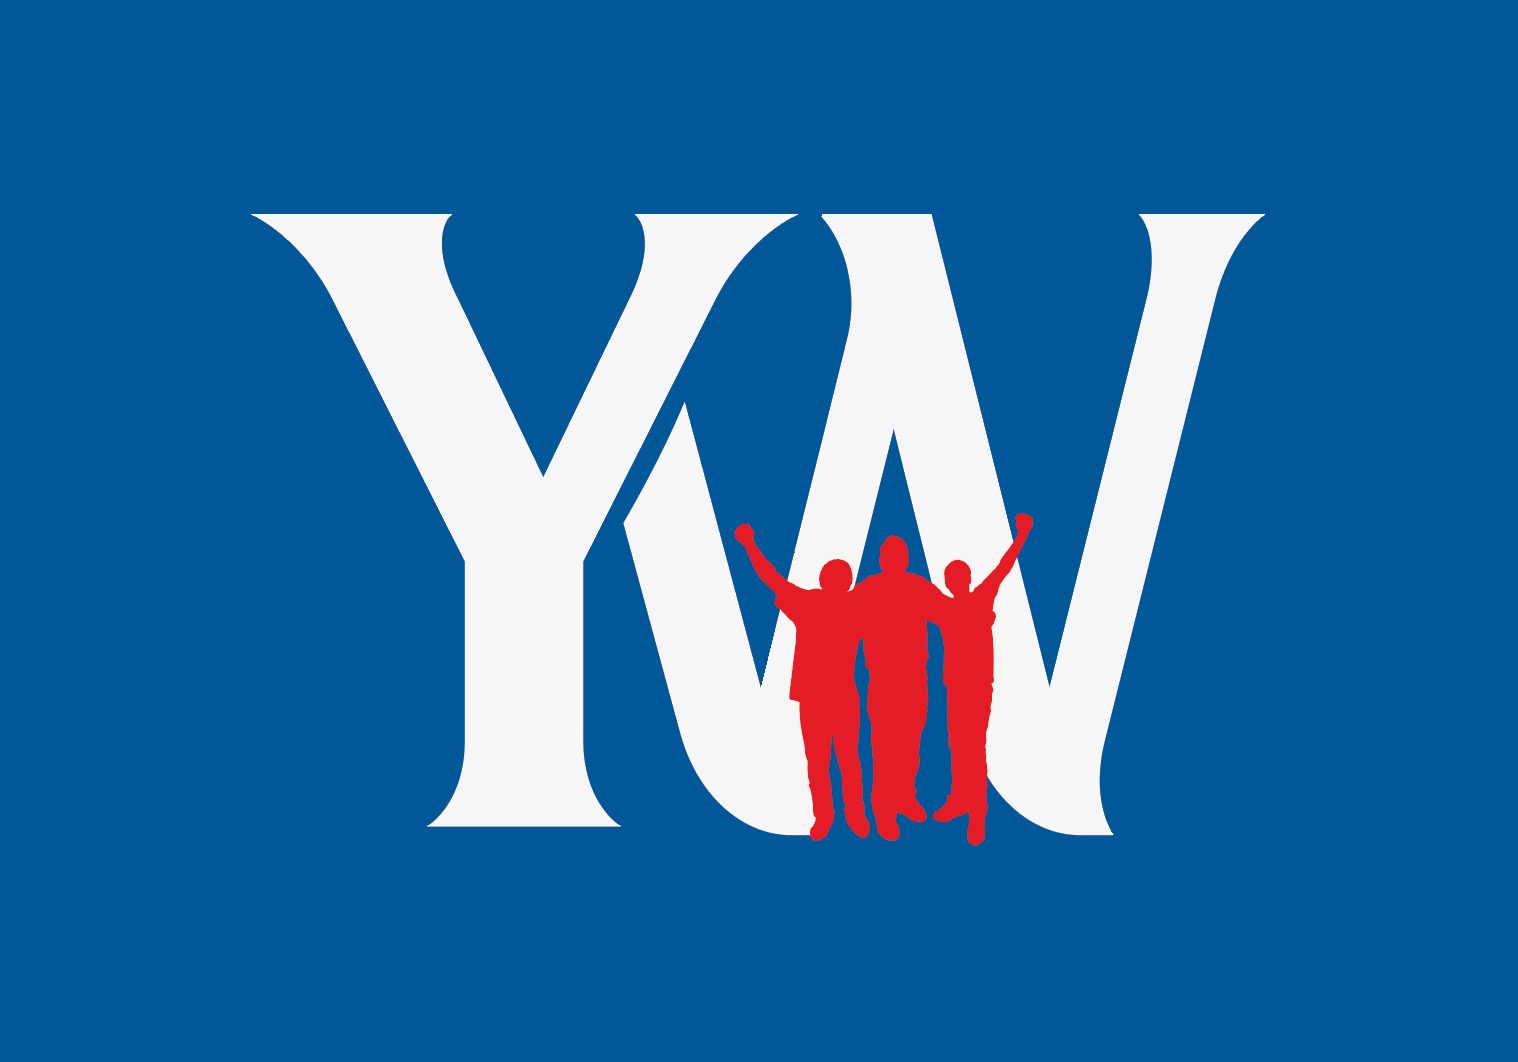 Young Warriors logo